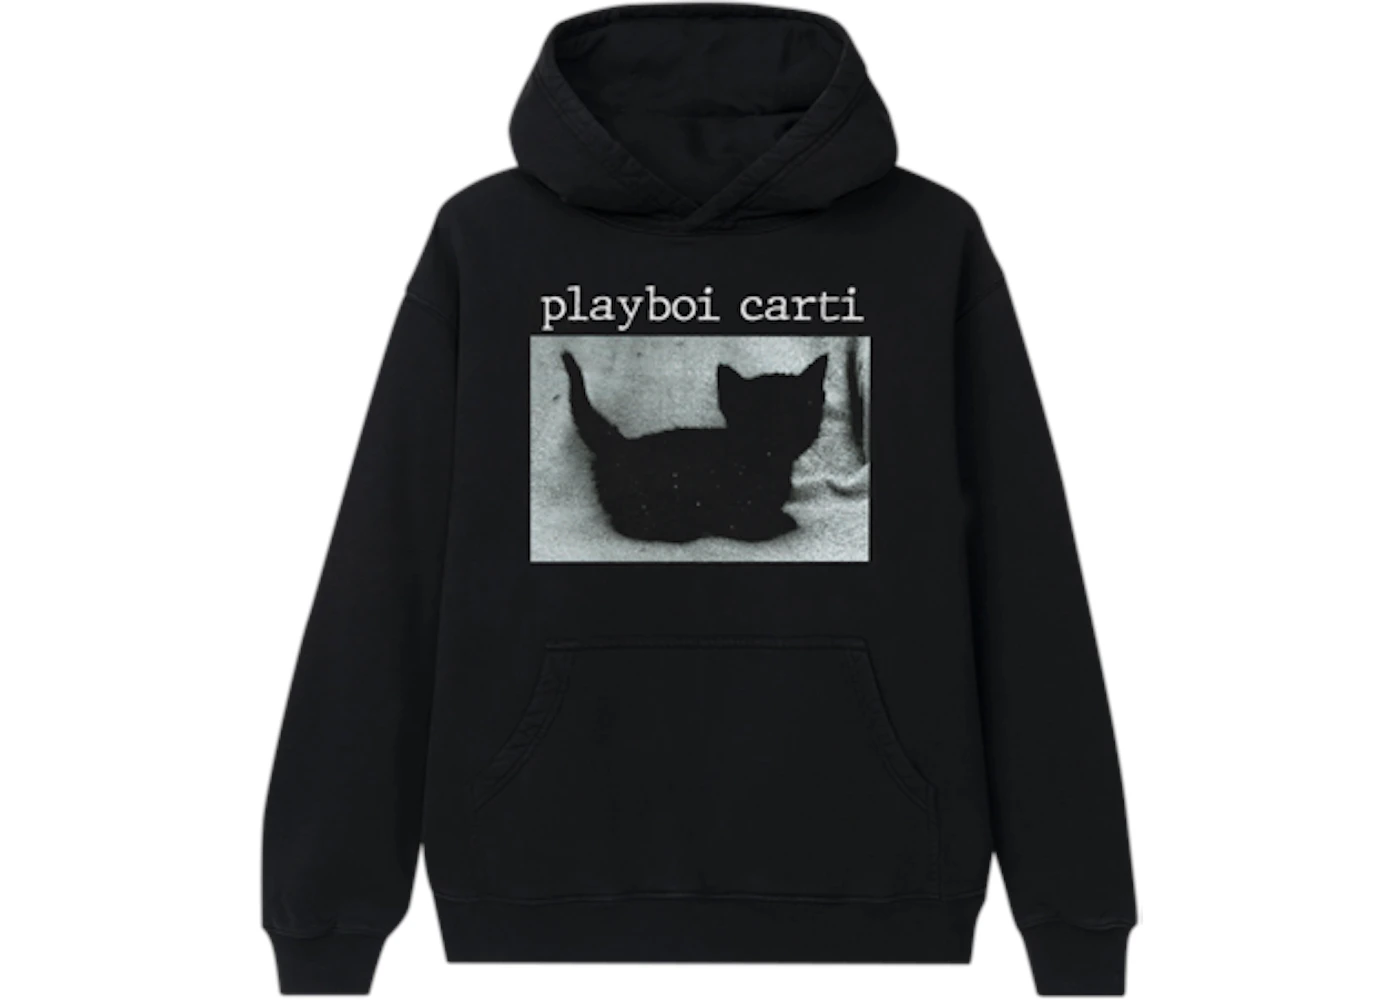 Playboi carti “black cat” hoodie www.np.gov.lk